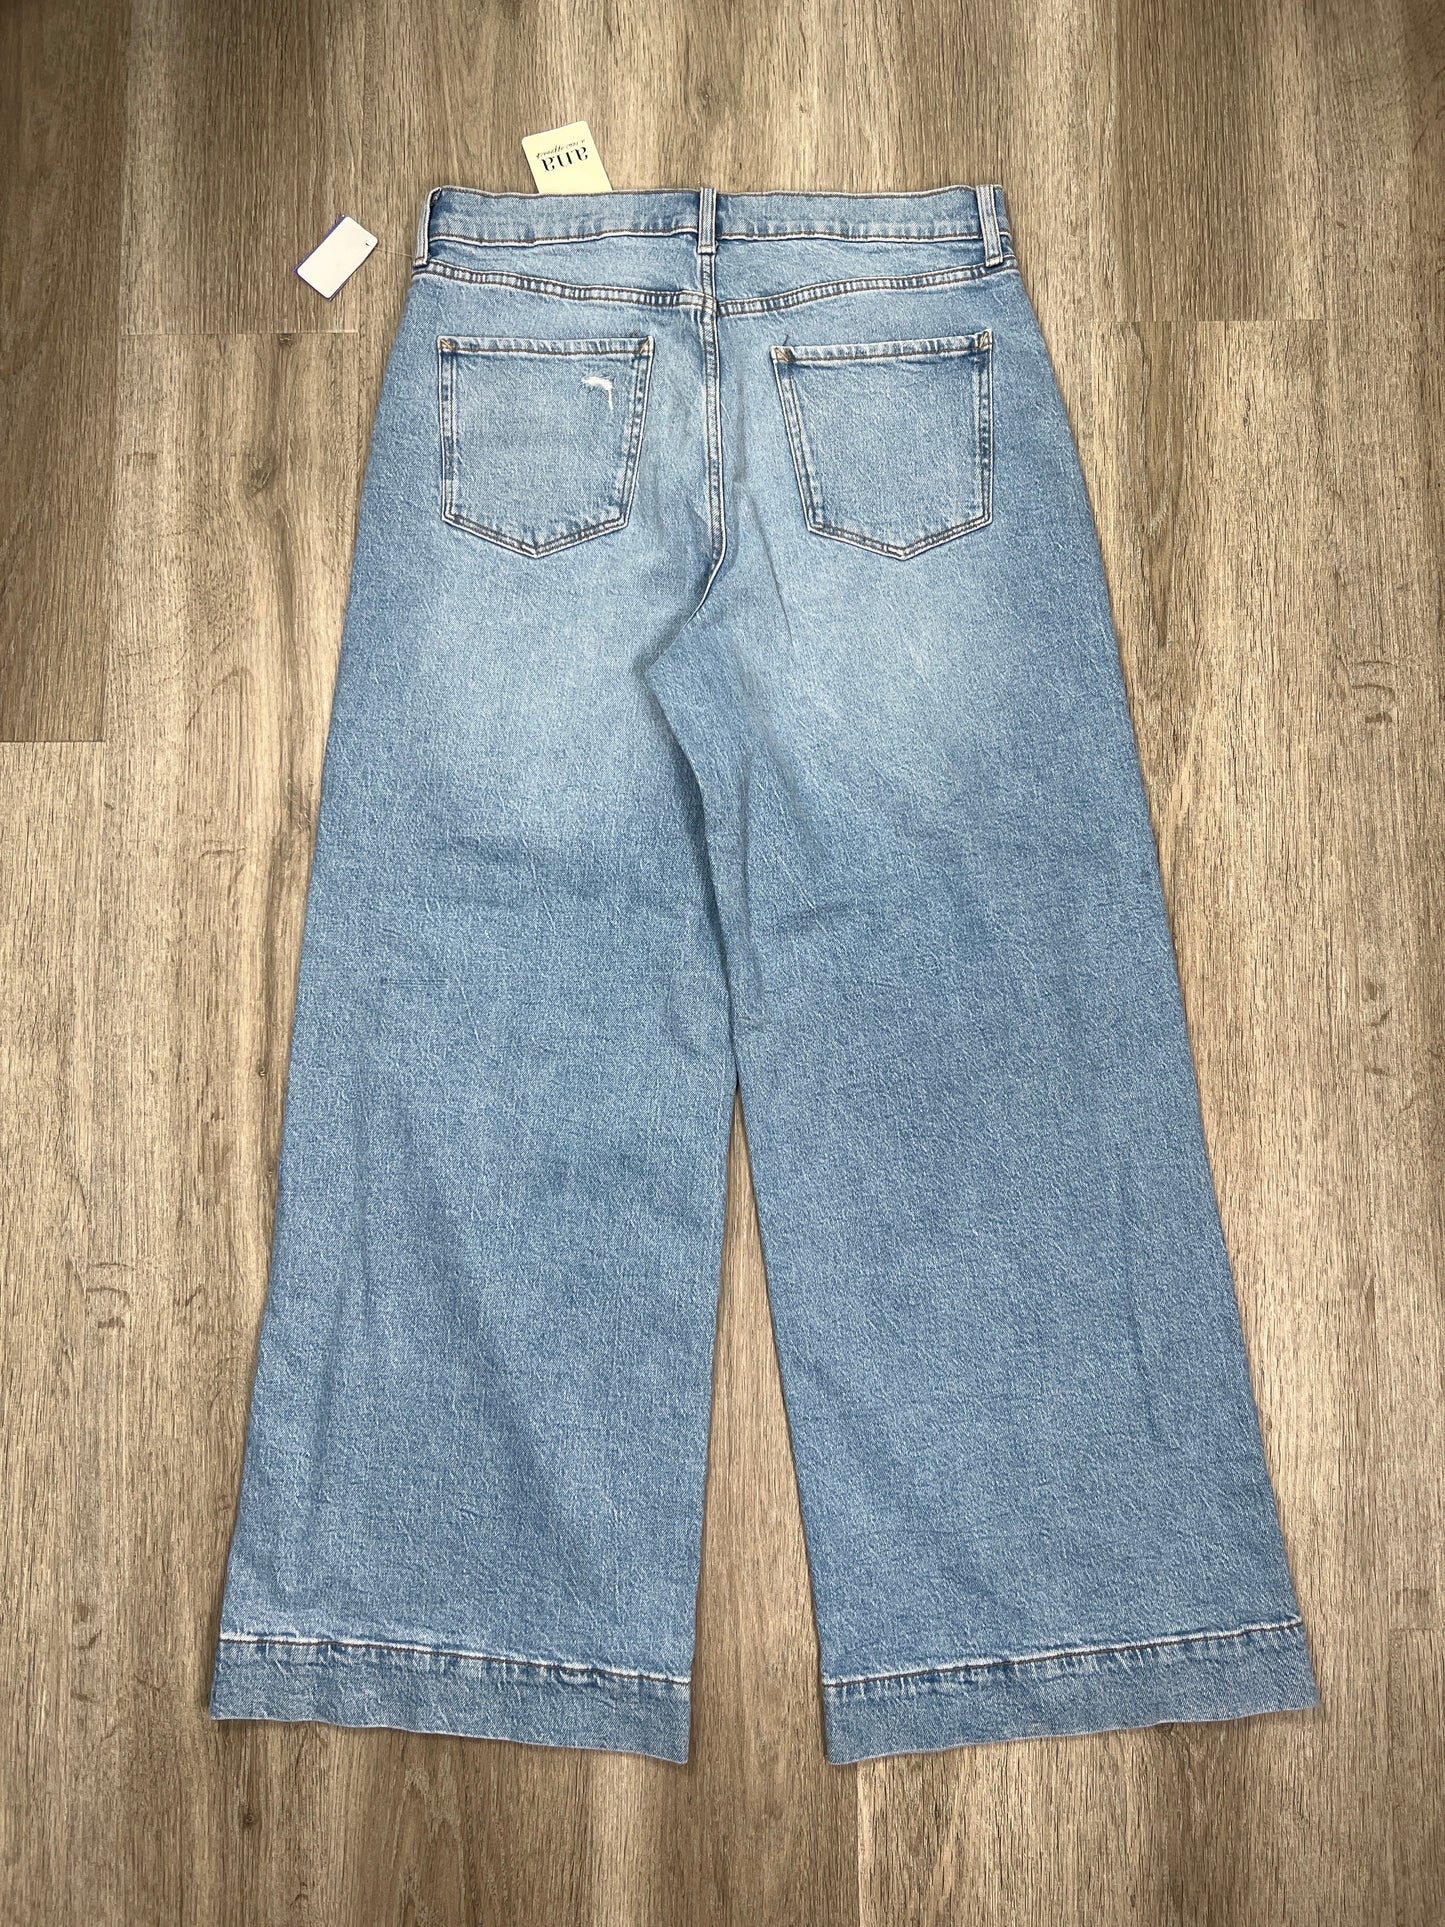 Blue Denim Jeans Wide Leg Ana, Size 14